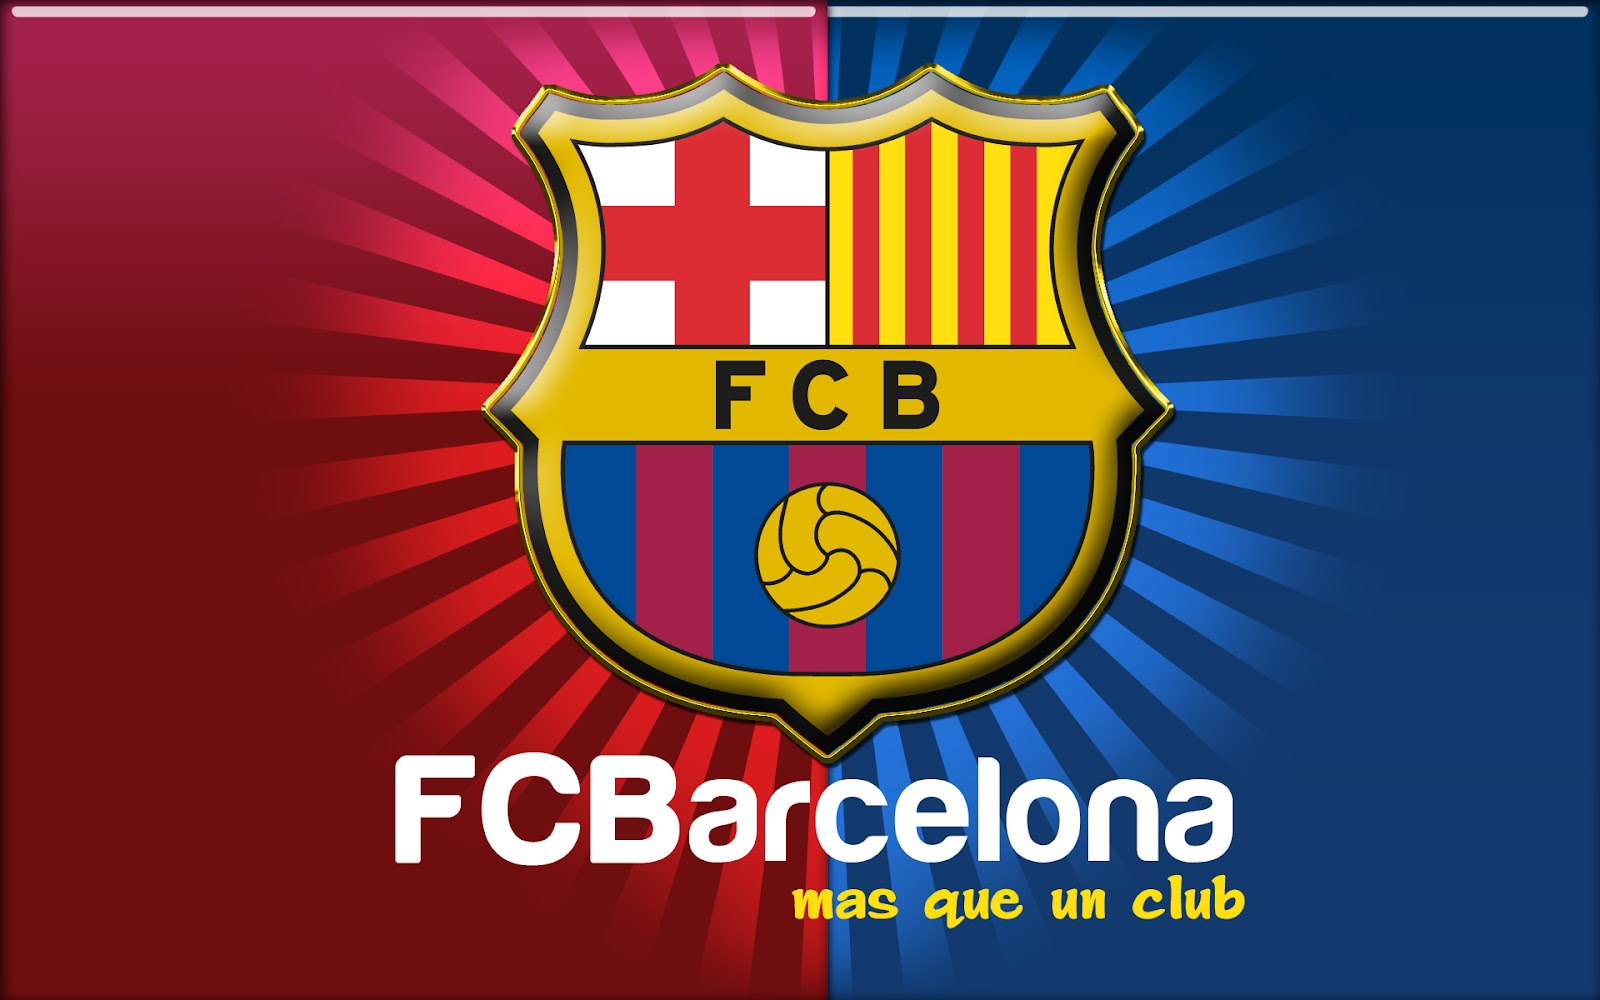 https://blogger.googleusercontent.com/img/b/R29vZ2xl/AVvXsEhRqy-cx-9WGocpfPChwusuT_aqmS6oyQEkziA-KOtPT7UfF791Y7OVF741lrg2bEkkRUVh2uIzhJuCfZbK10rXNvshSbSeeGd1cfoNJIhEeLYxV6tc1j0hZLDuW5s3BoTqoPaanhQwpWA/s1600/fc-barcelona-logo_romania-megalitica.jpg